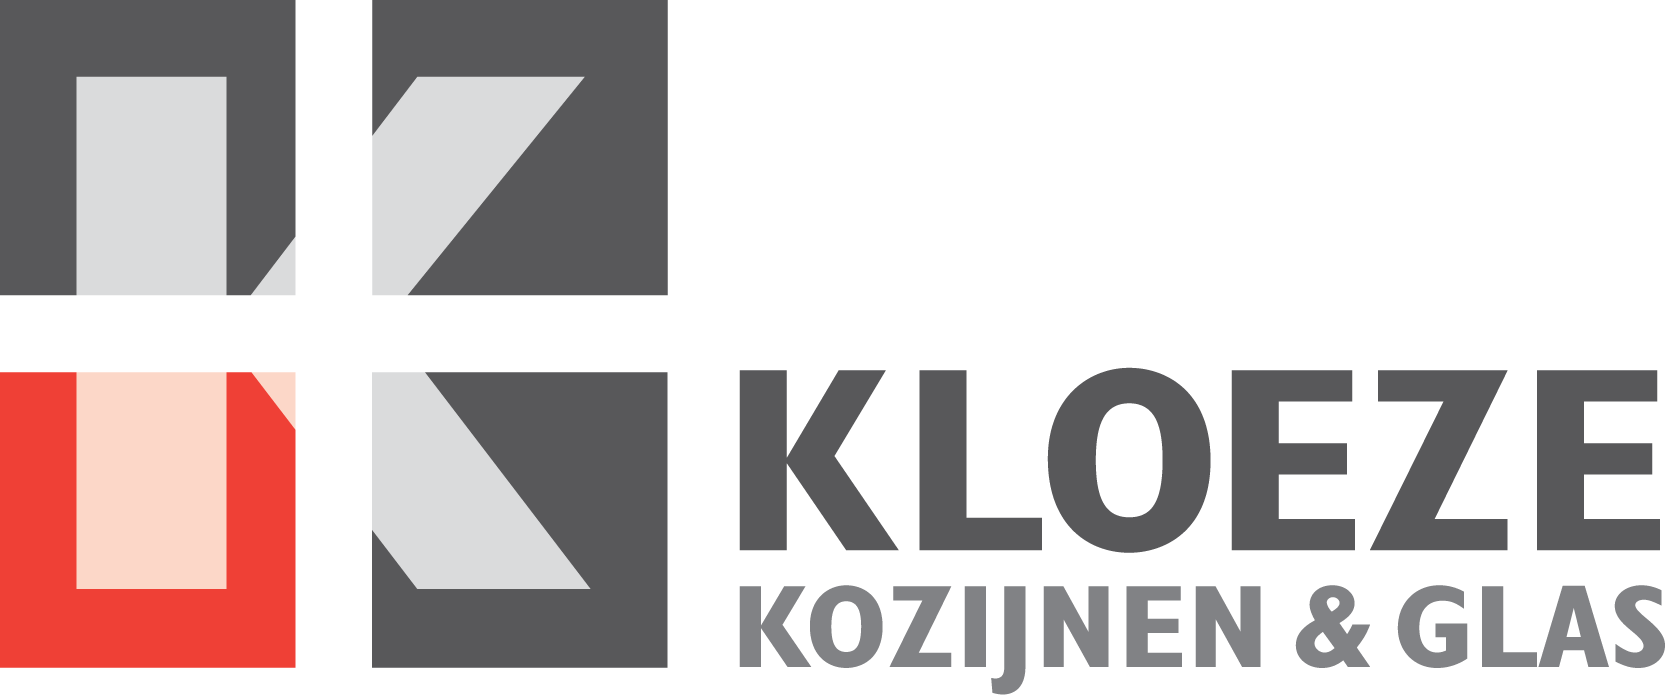 Kloeze Kozijnen & Glas